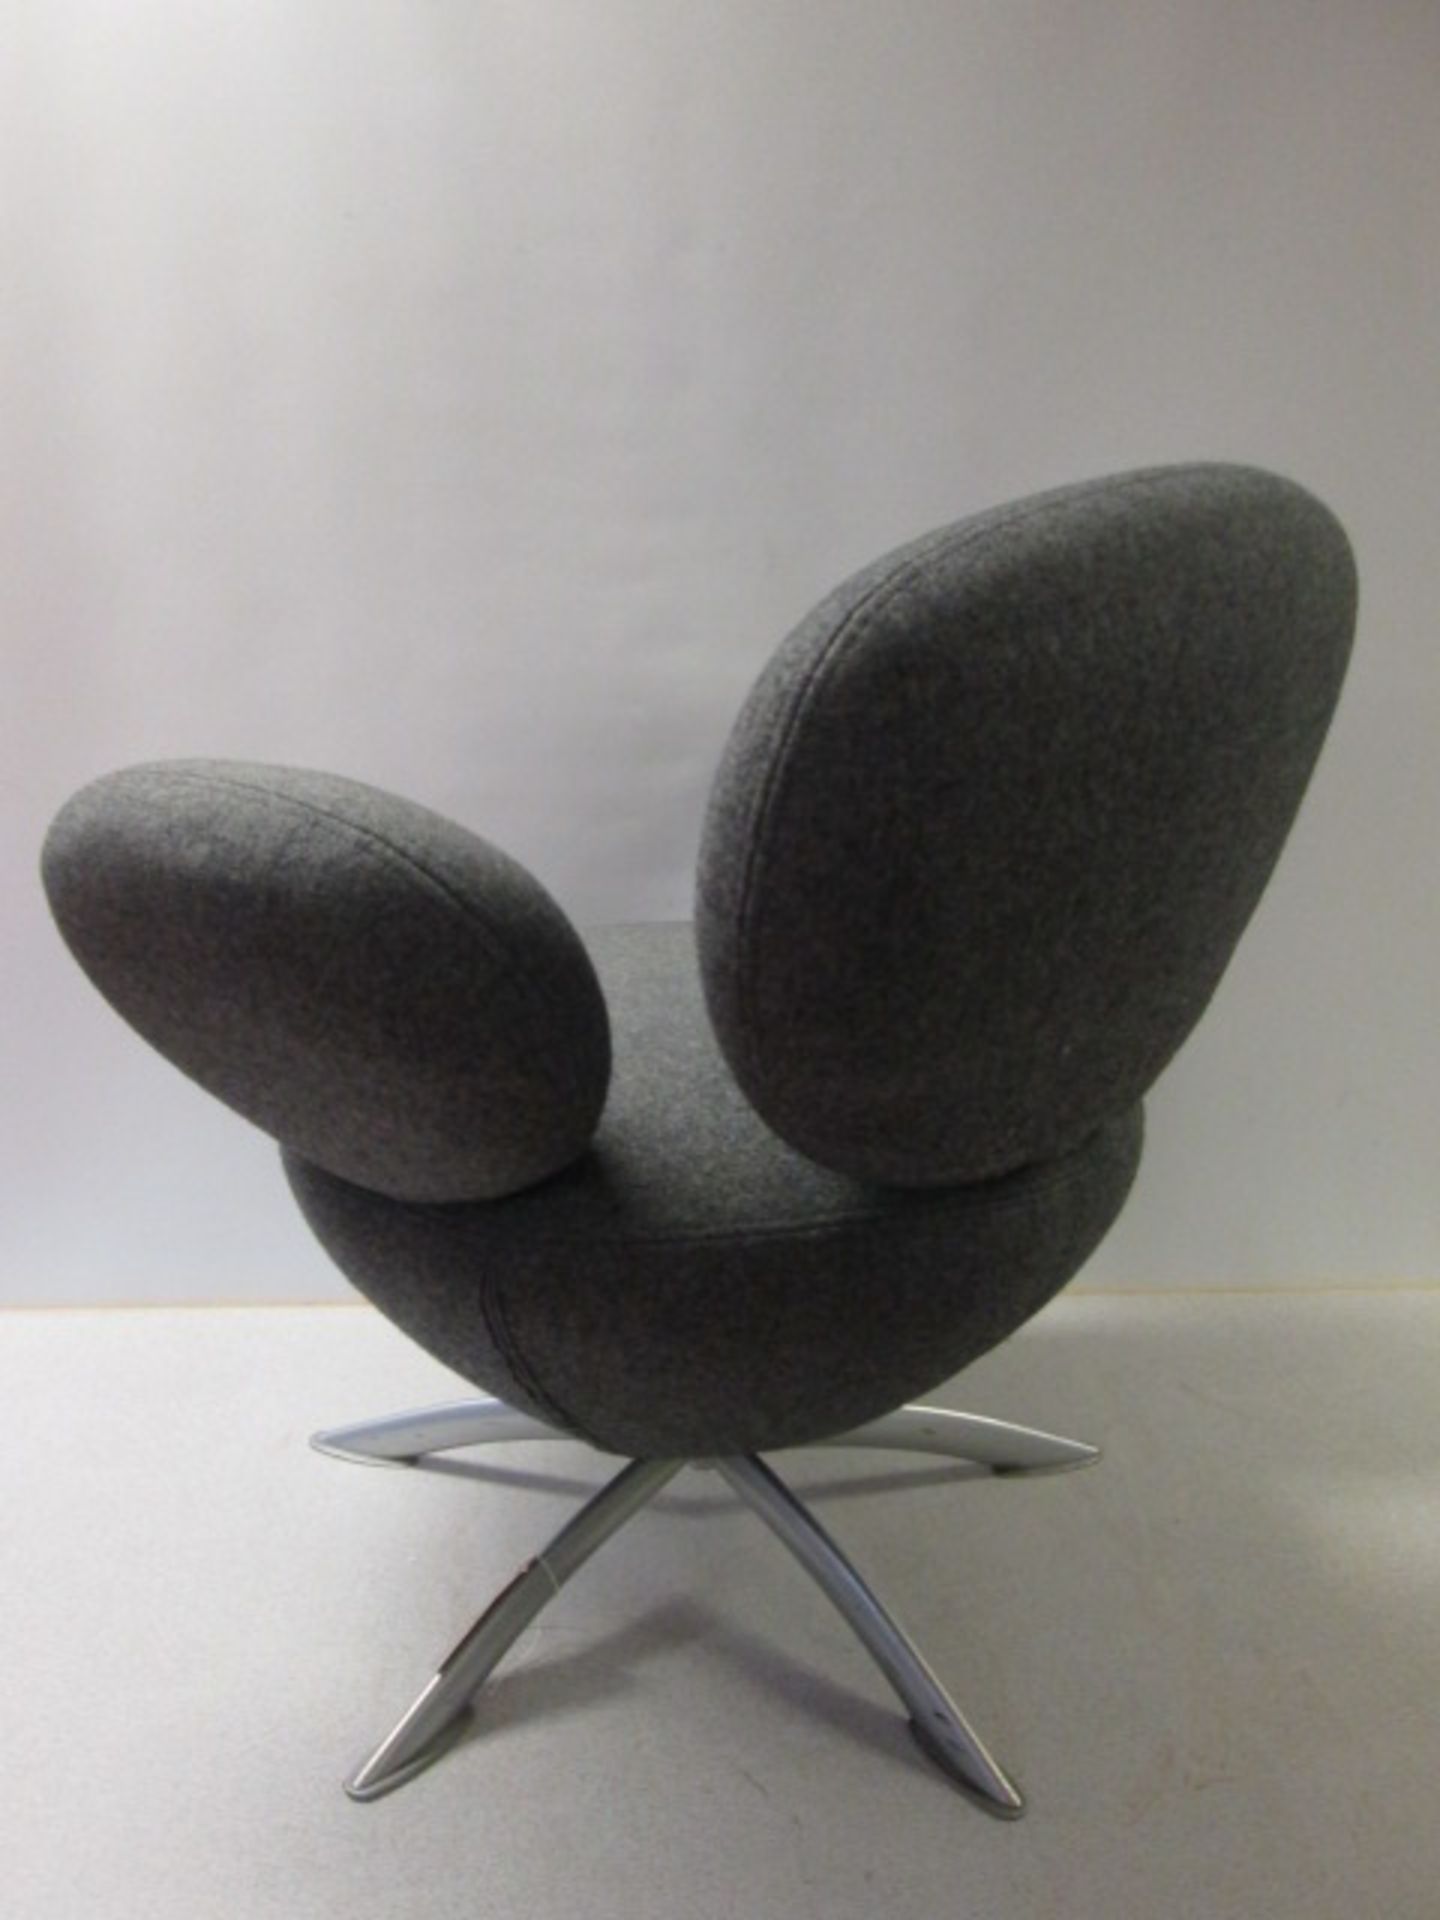 Funky Designer Style 5 Spoke Swivel Chair in Grey Fabric. - Image 2 of 2